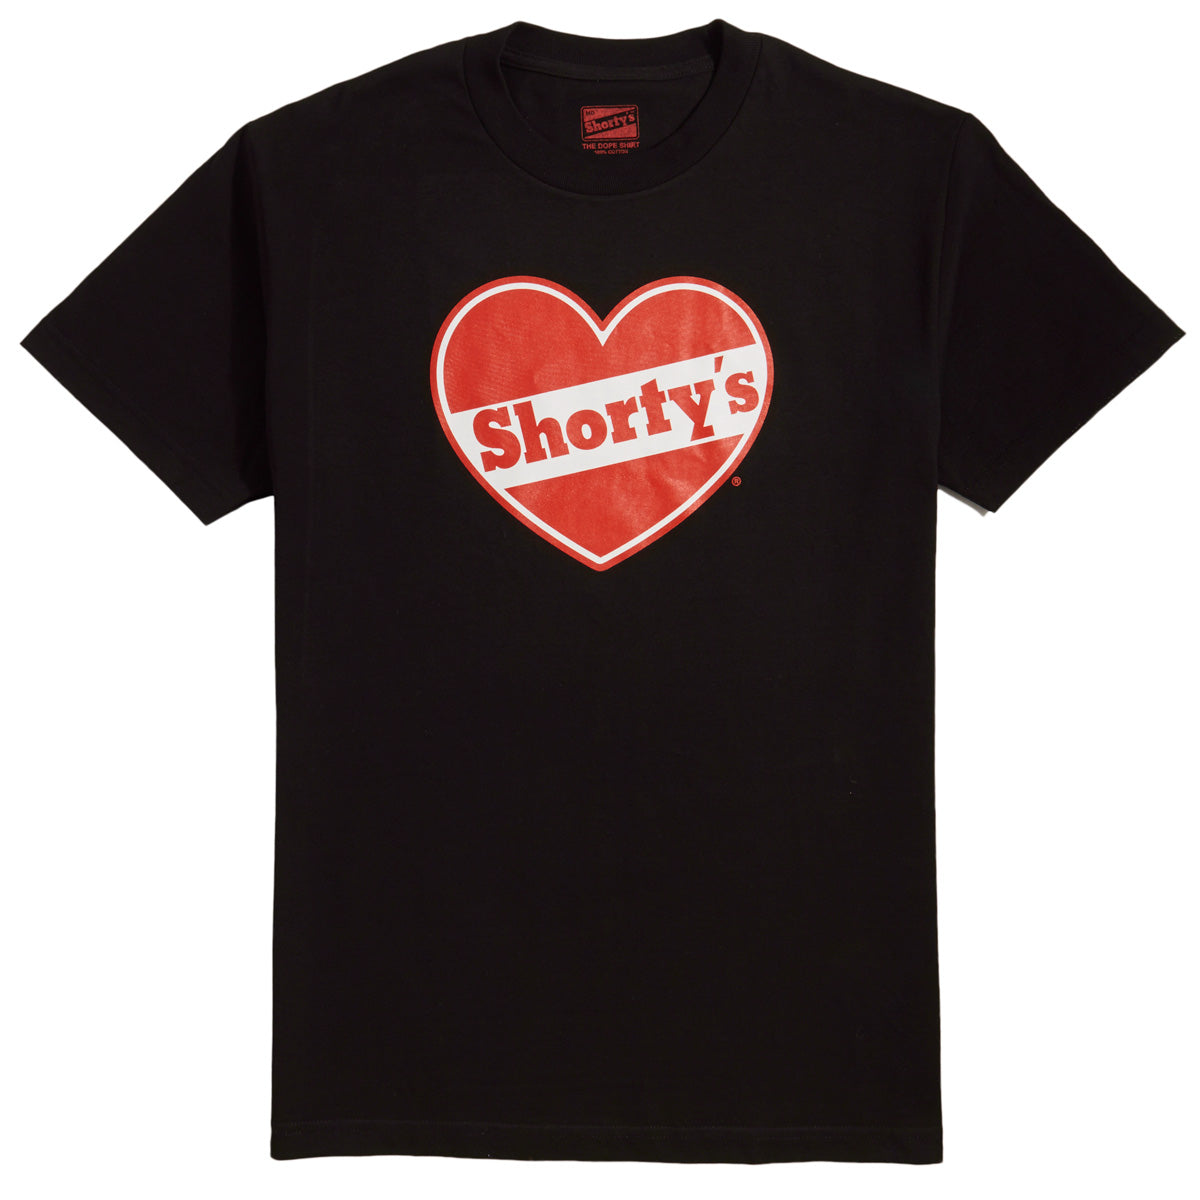 Shortys Heart Logo T-Shirt - Black image 1